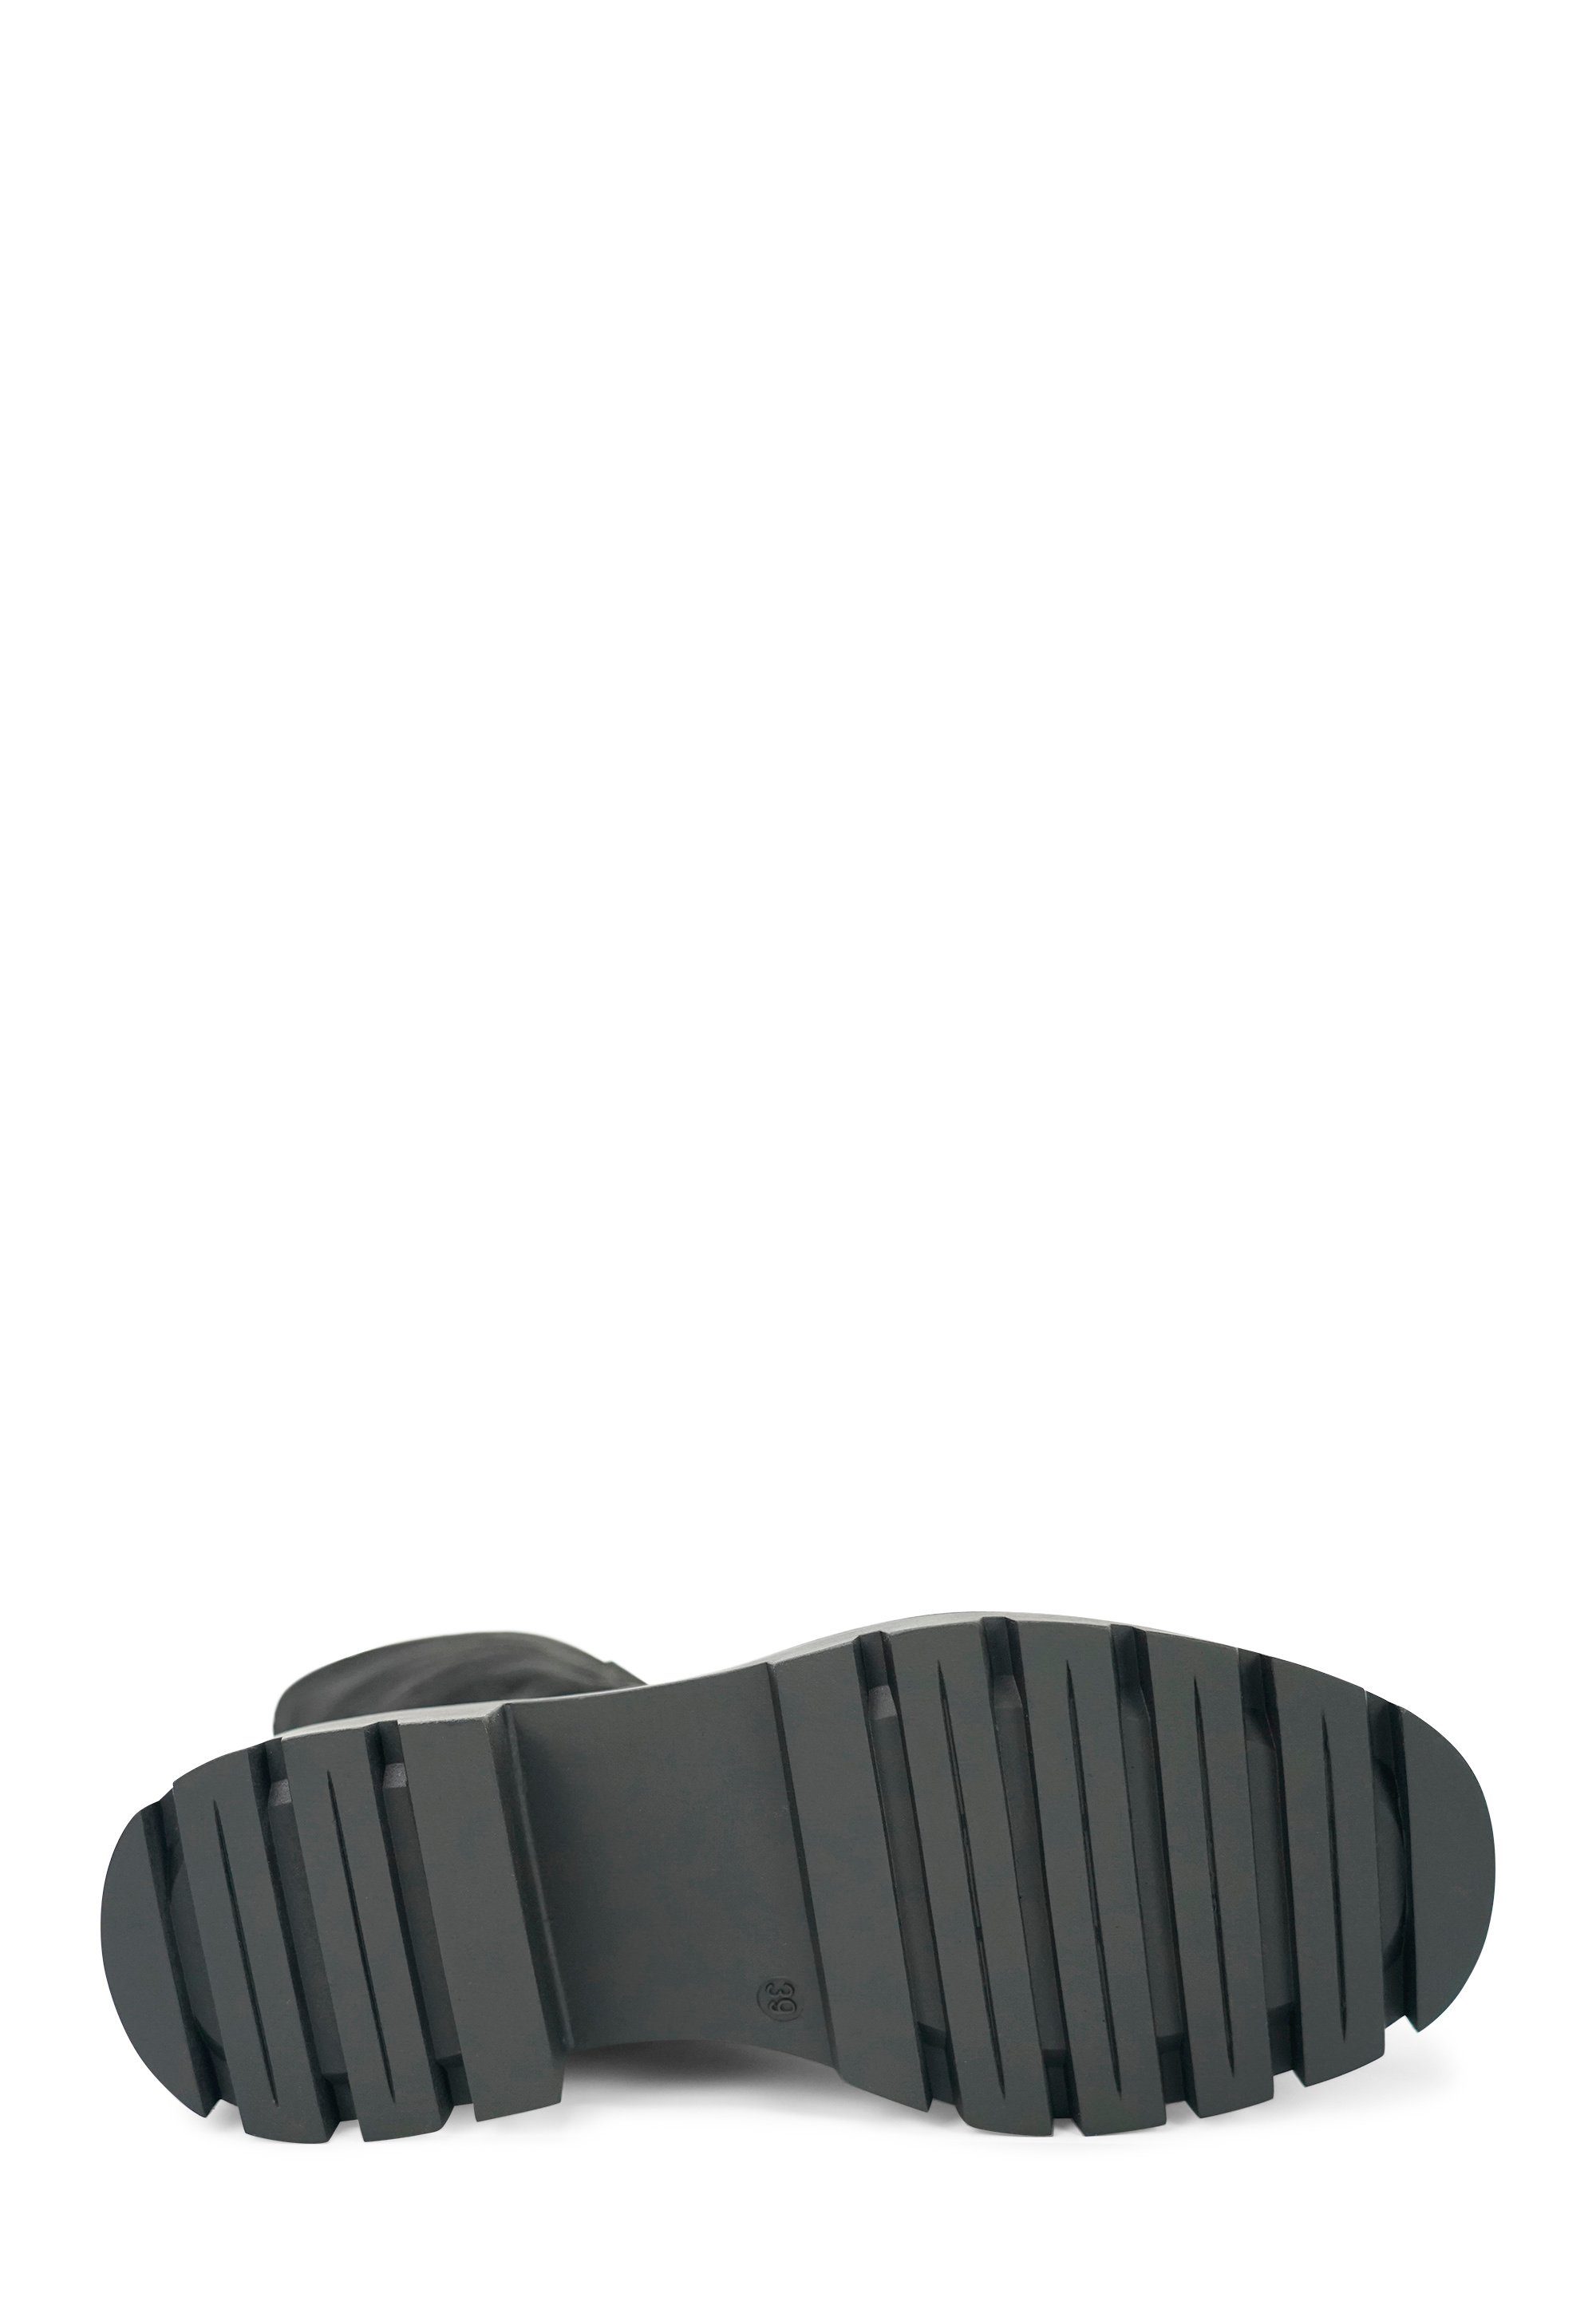 Stiefel Plateausohle Findlay schwarz moderner mit EVEREST